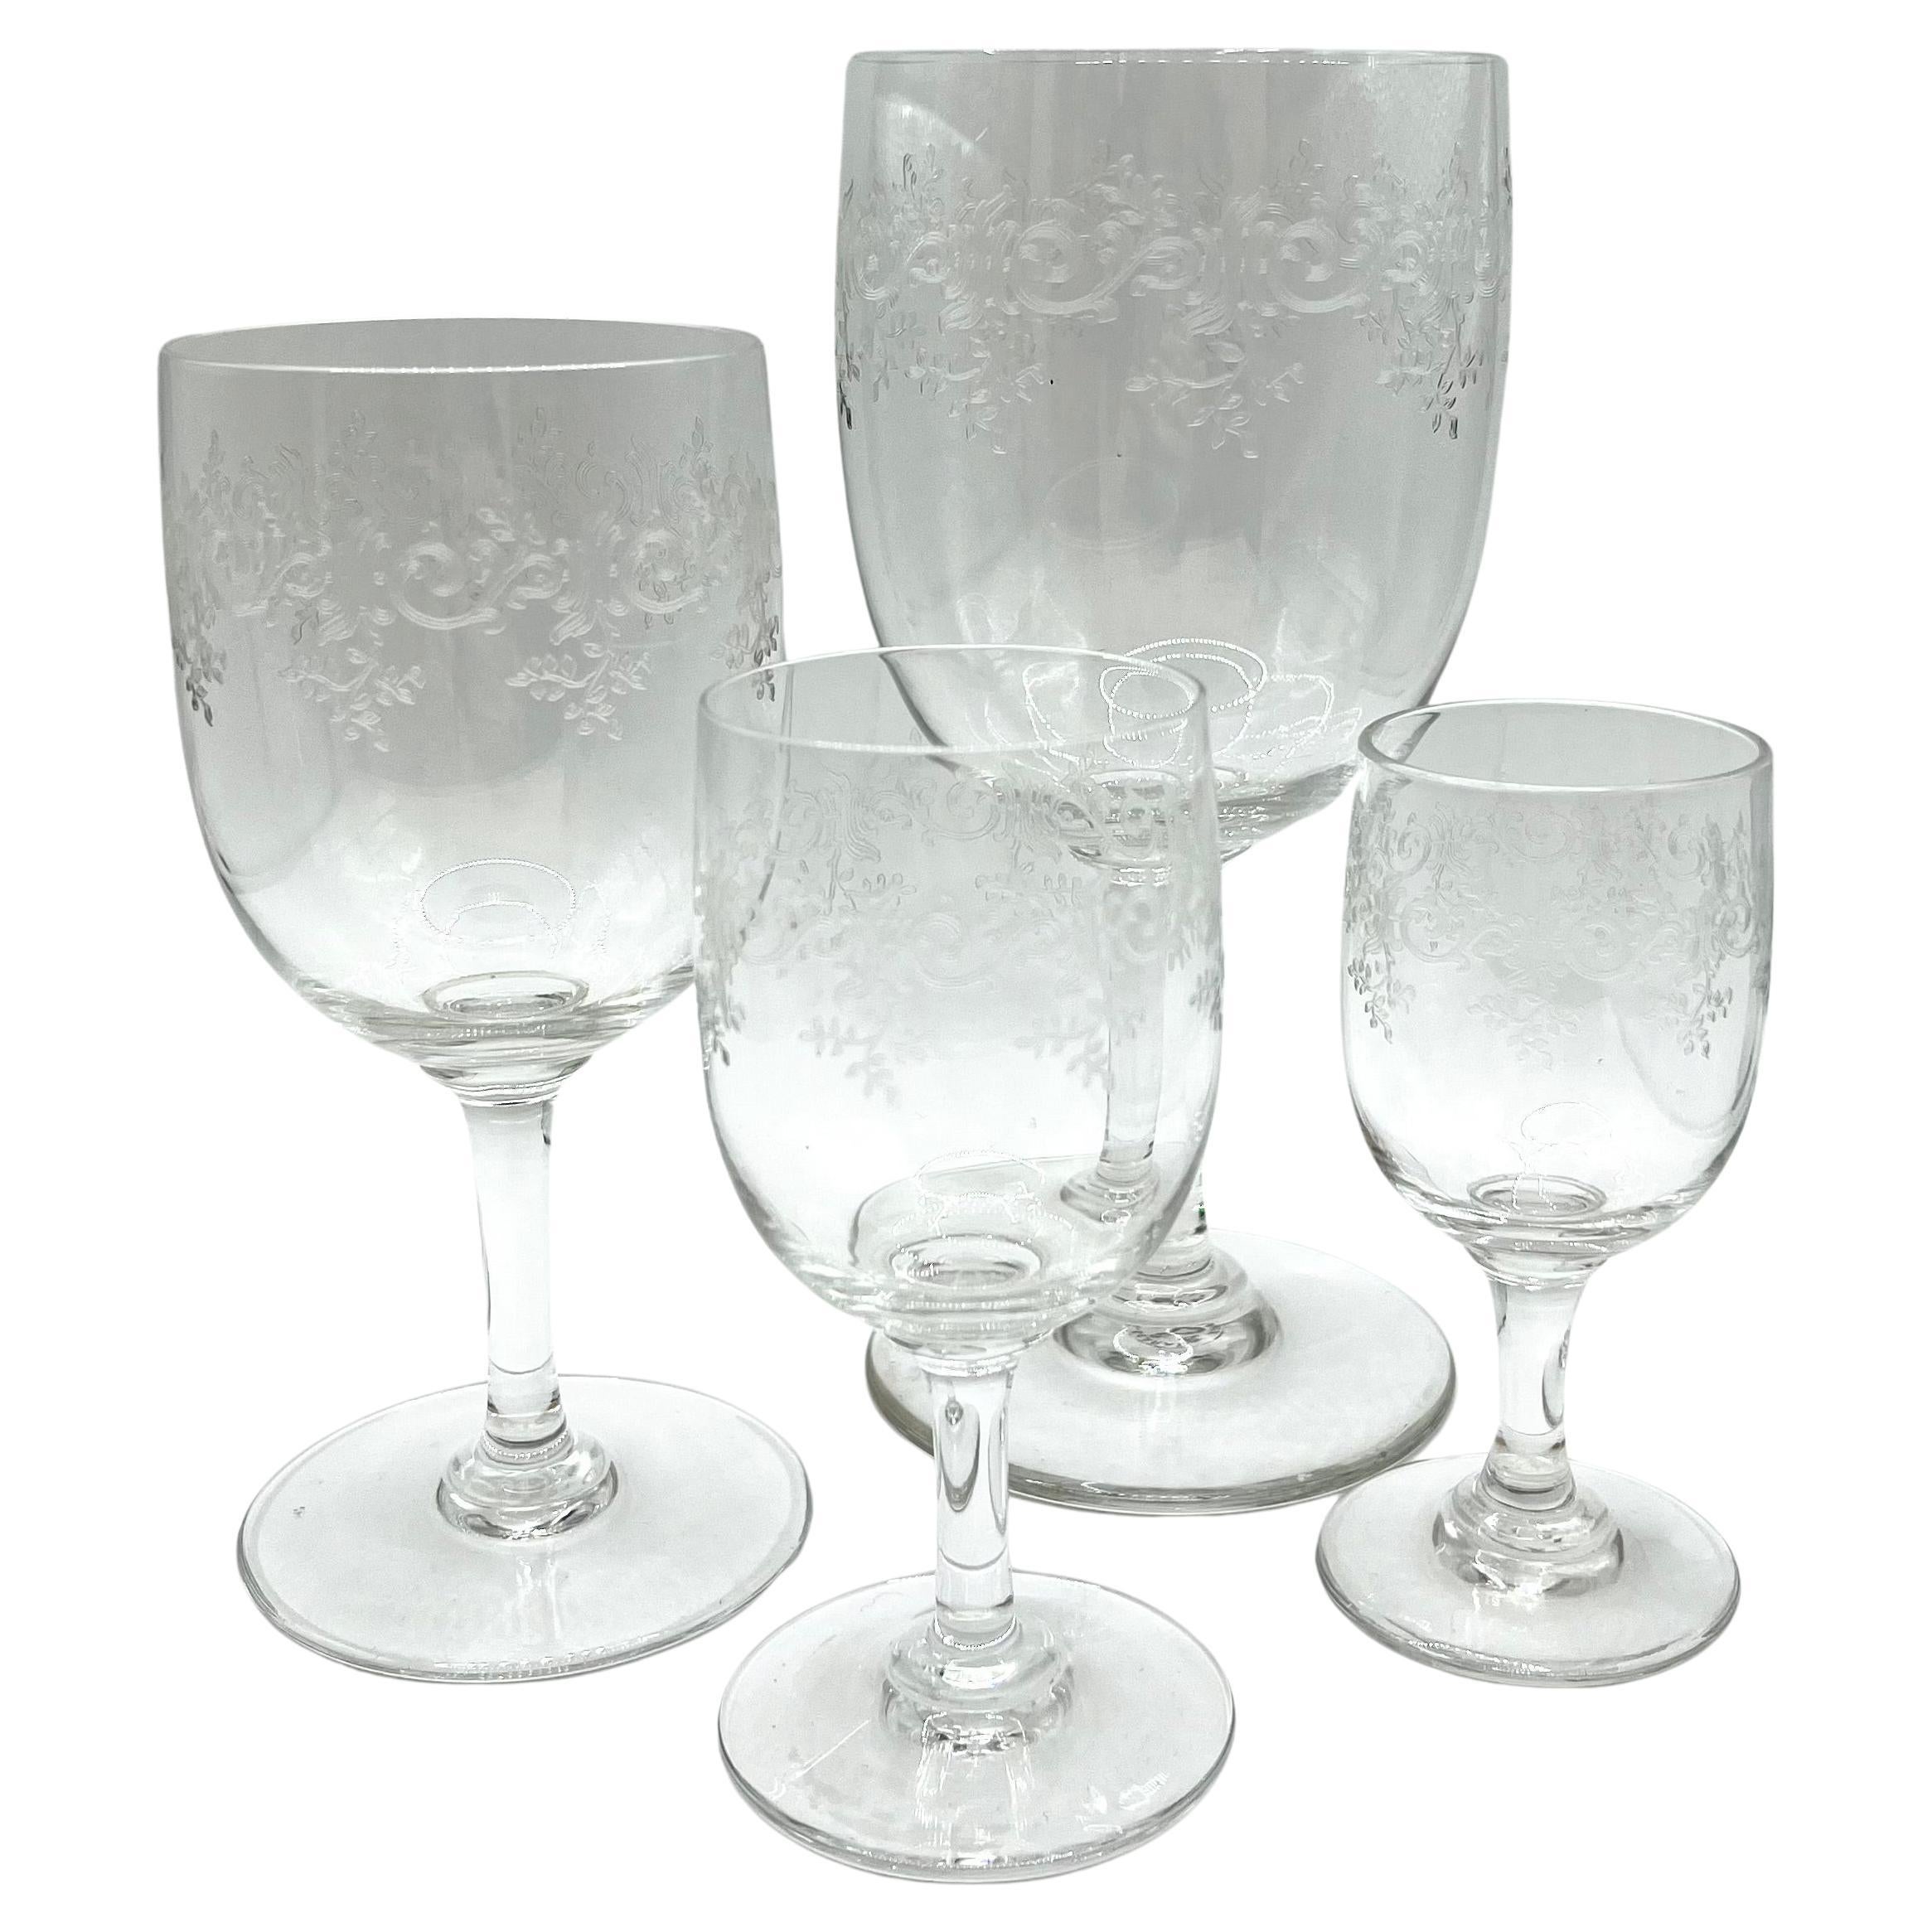 Set of 4 Baccarat crystal glasses signed - France - Sevigne model Louis XV style For Sale